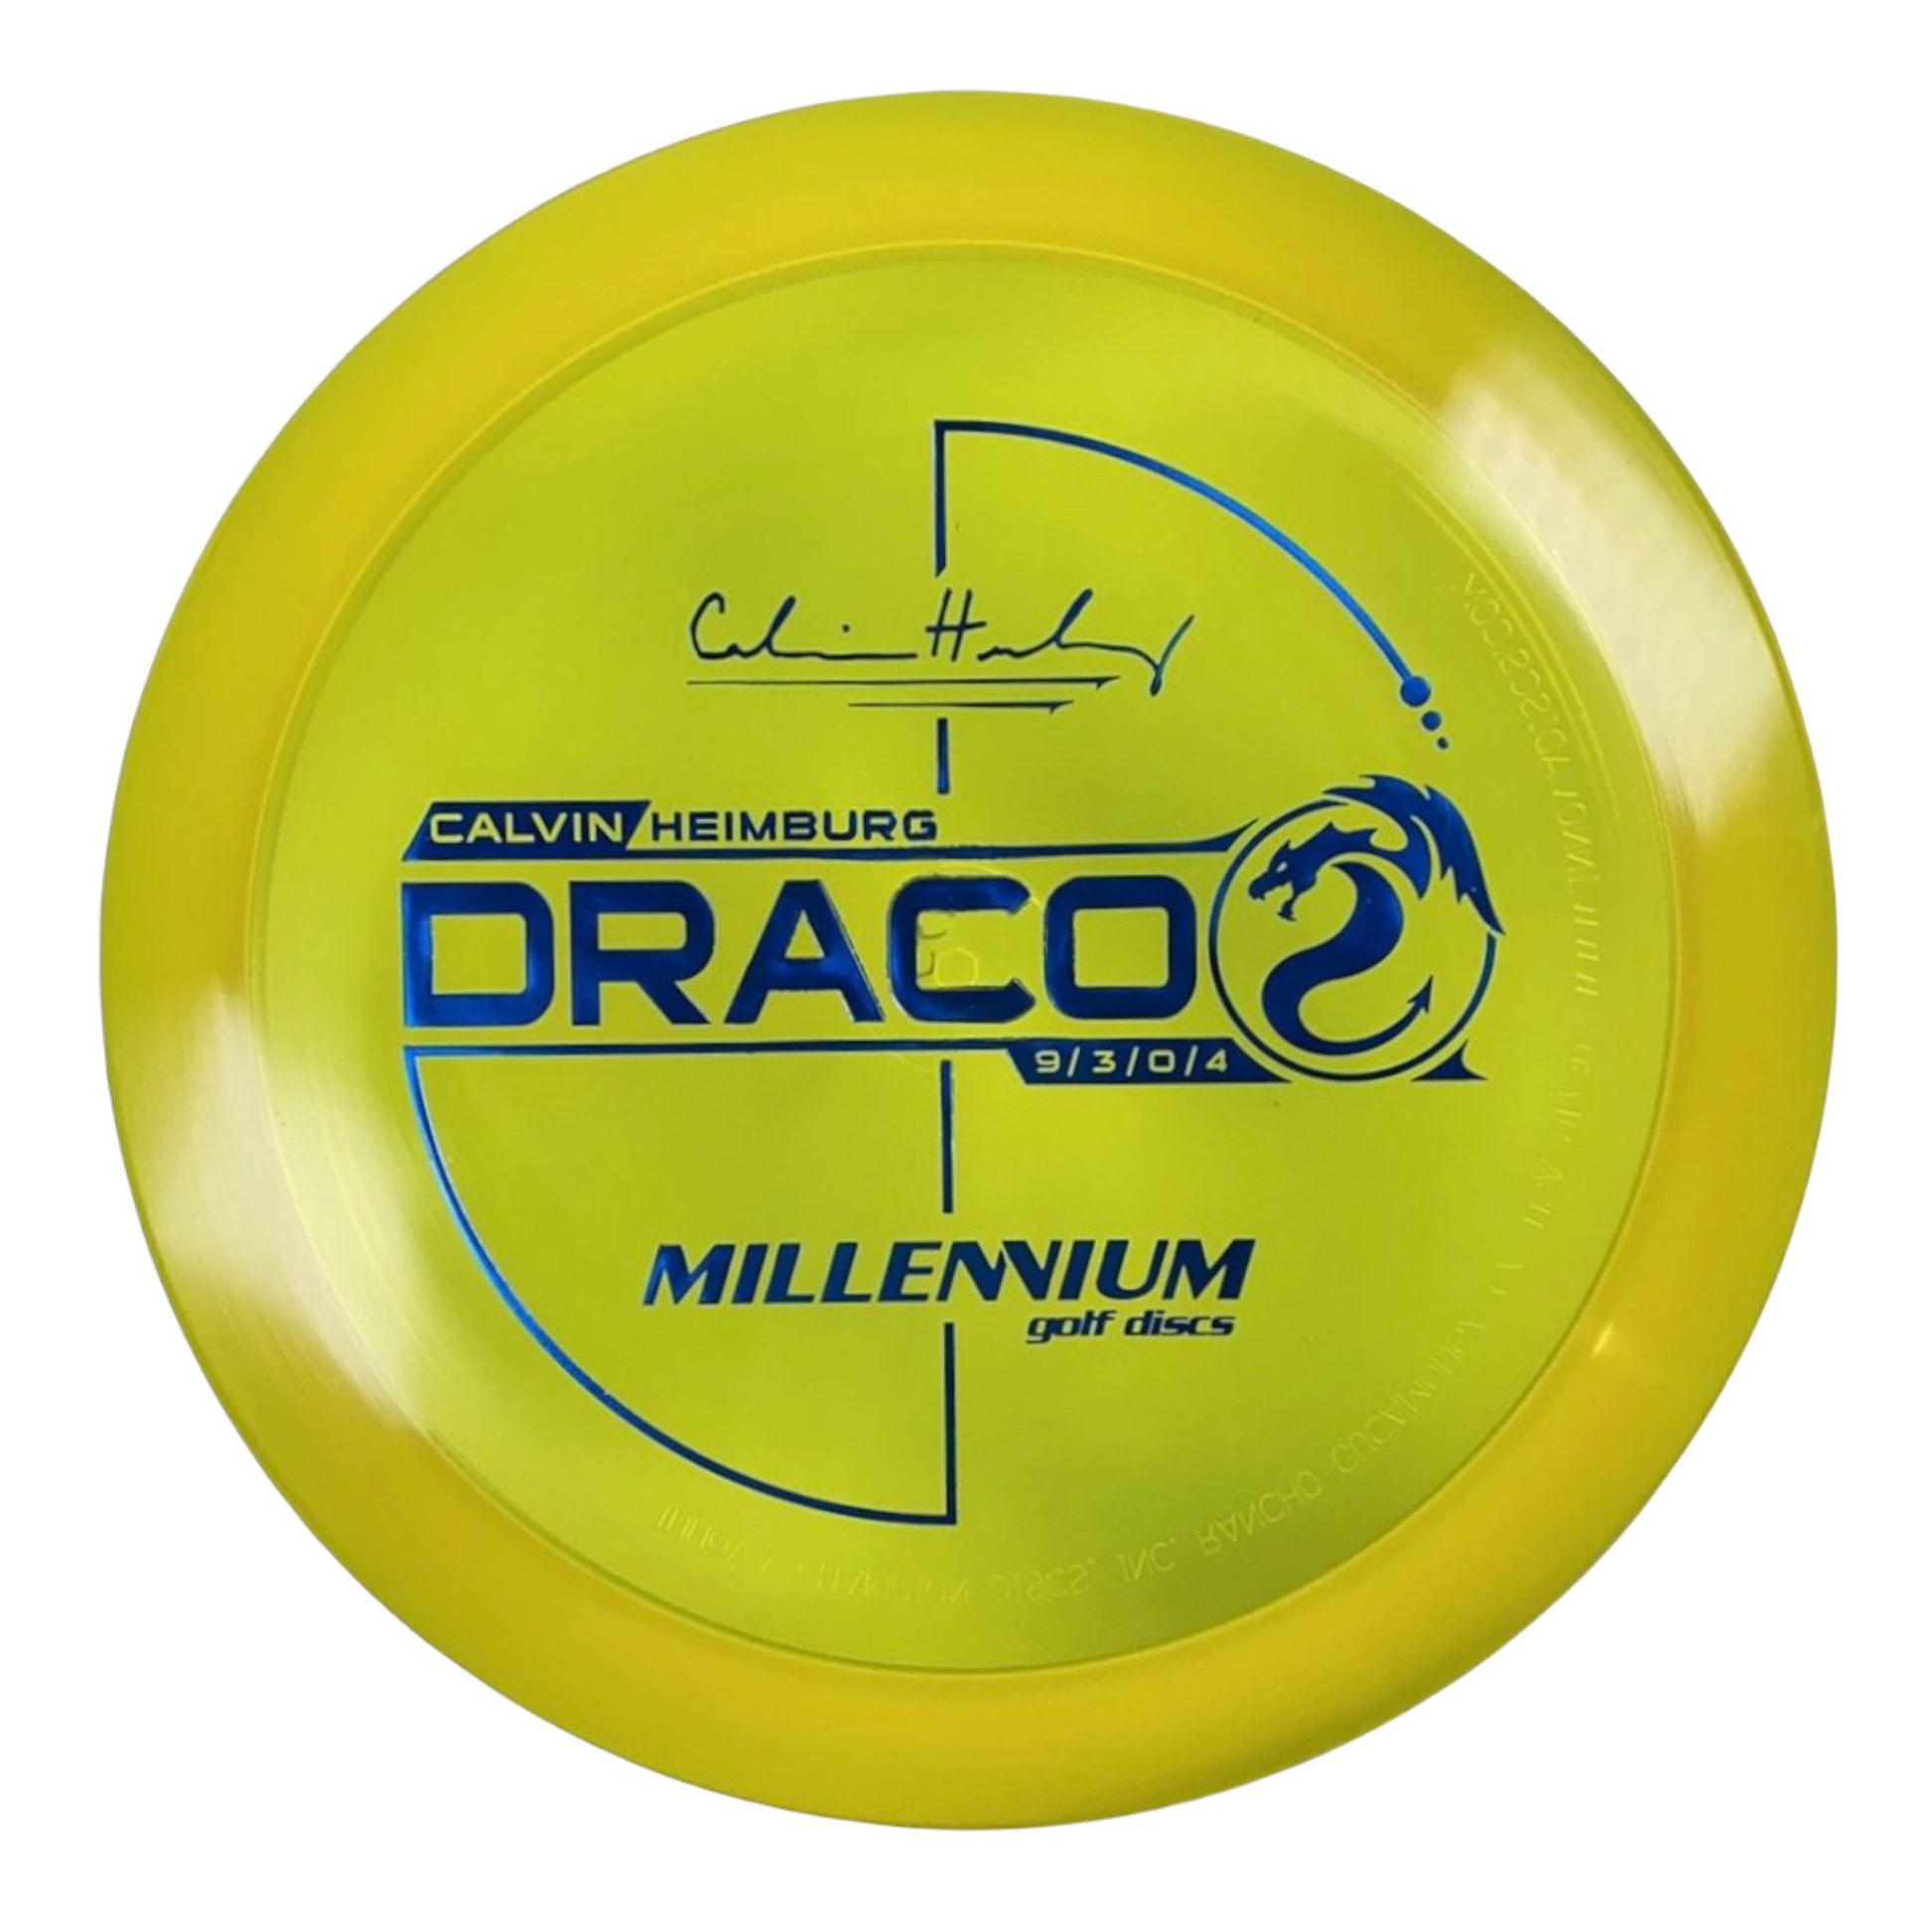 Millennium Golf Discs Draco | Quantum | Yellow/Blue 171-175g (Calvin Heimburg) Disc Golf